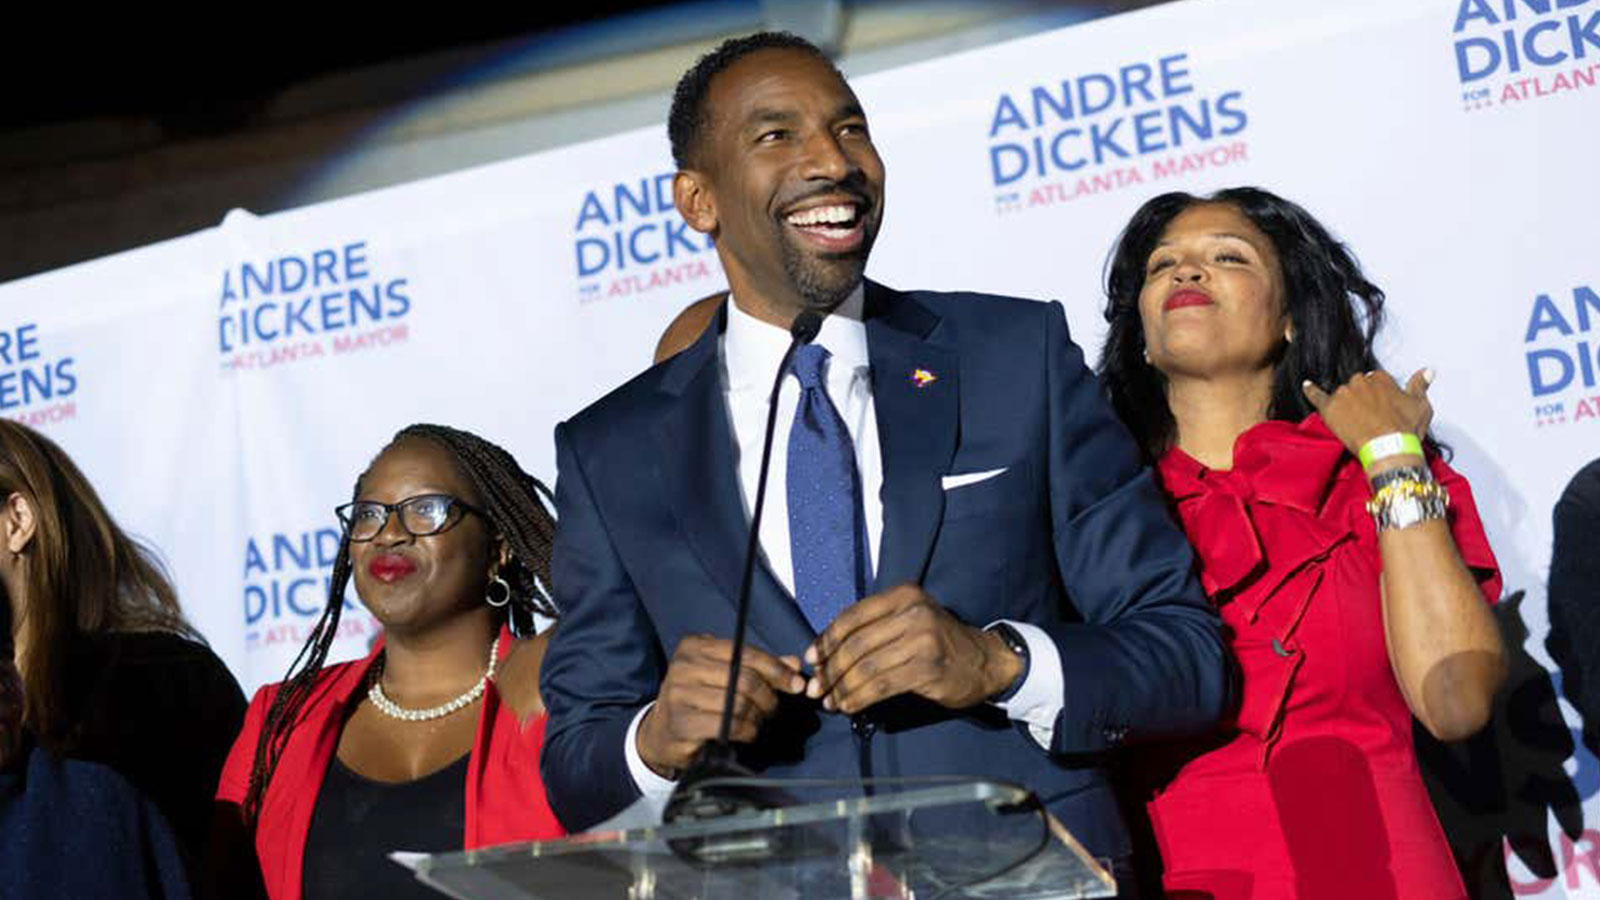 Andre Dickens is the next mayor of Atlanta